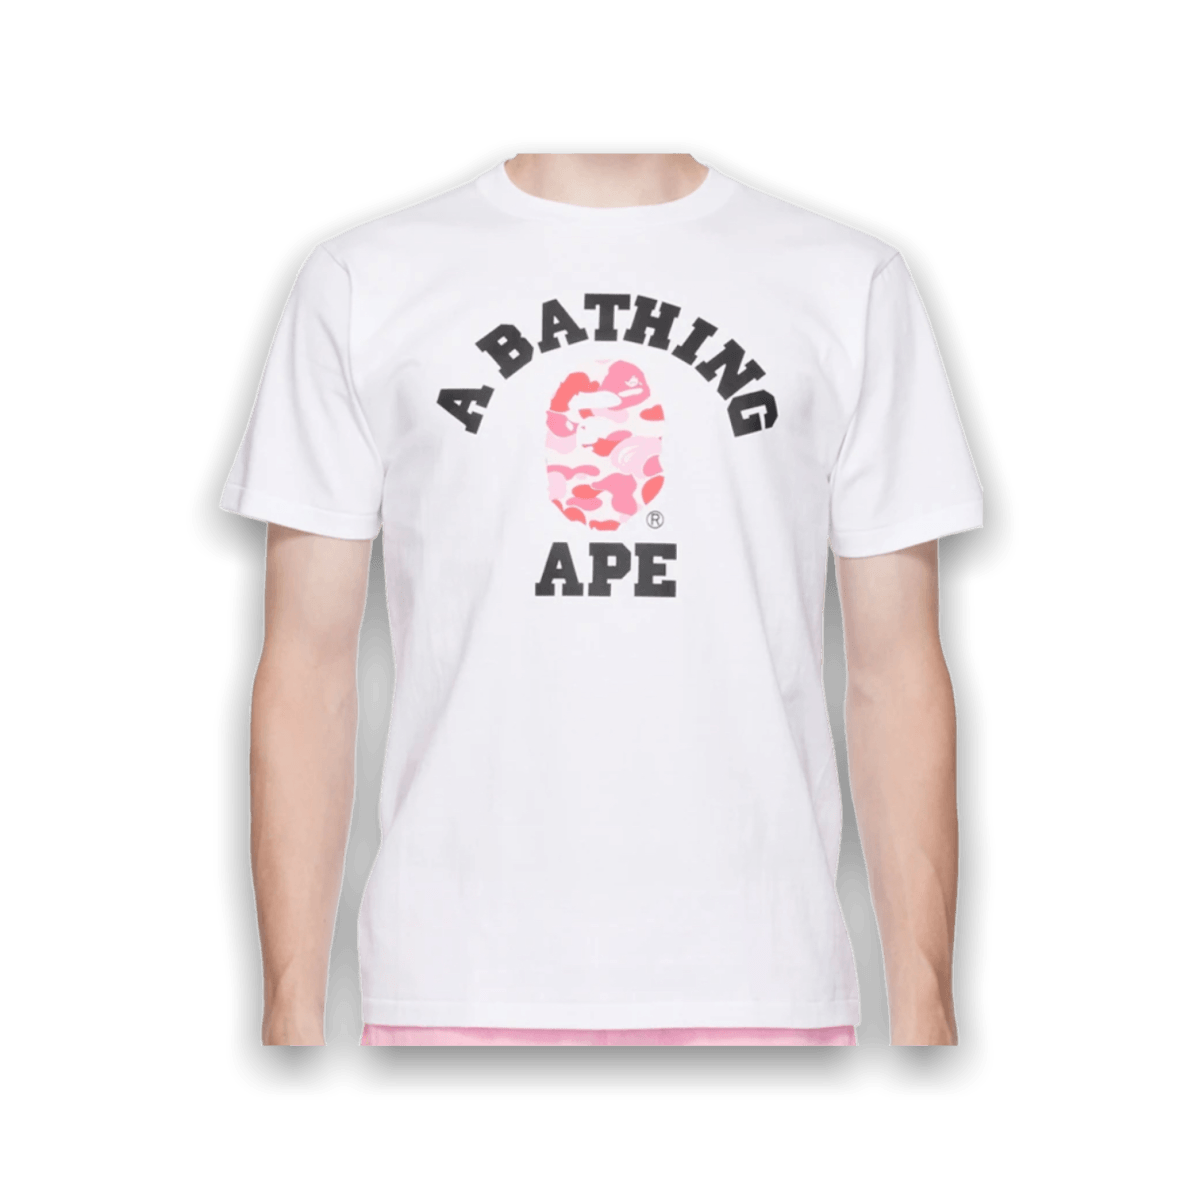 BAPE White ABC Camo College T-Shirt - Pink Camo - T-Shirt - Bape - Jawns on Fire - sneakers